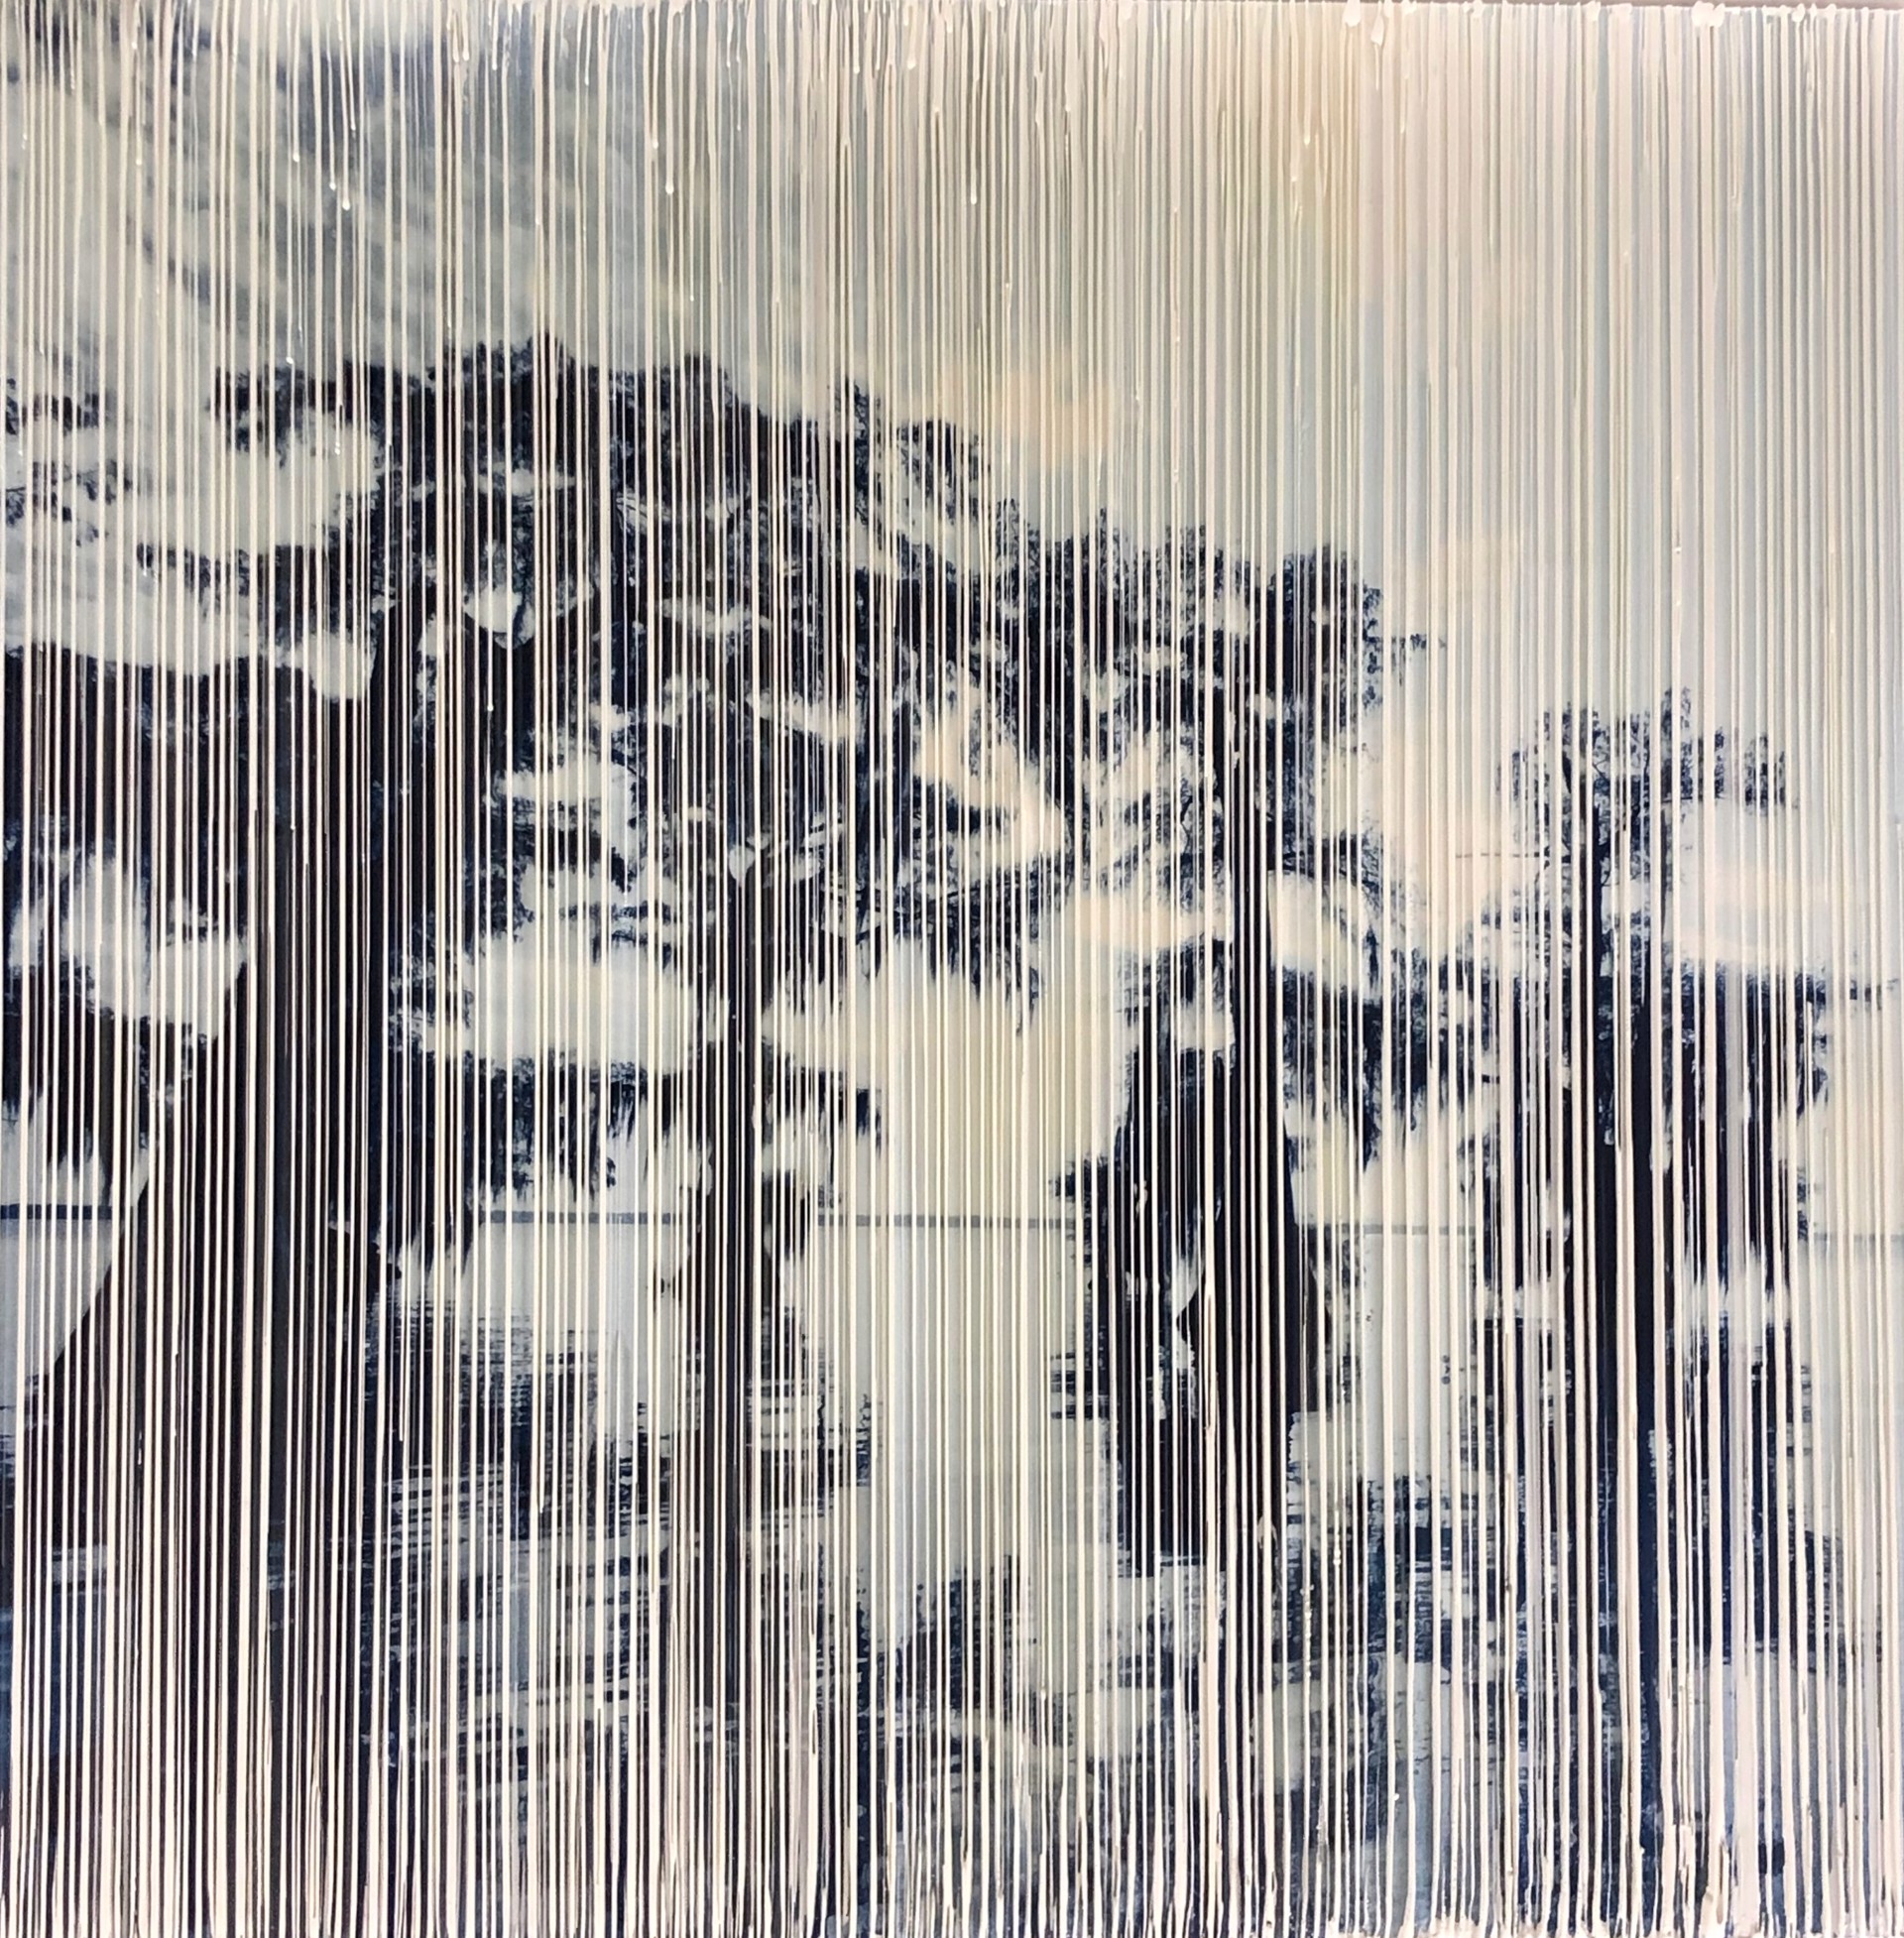 Cypress by Pezhman, Phoria Landscapes